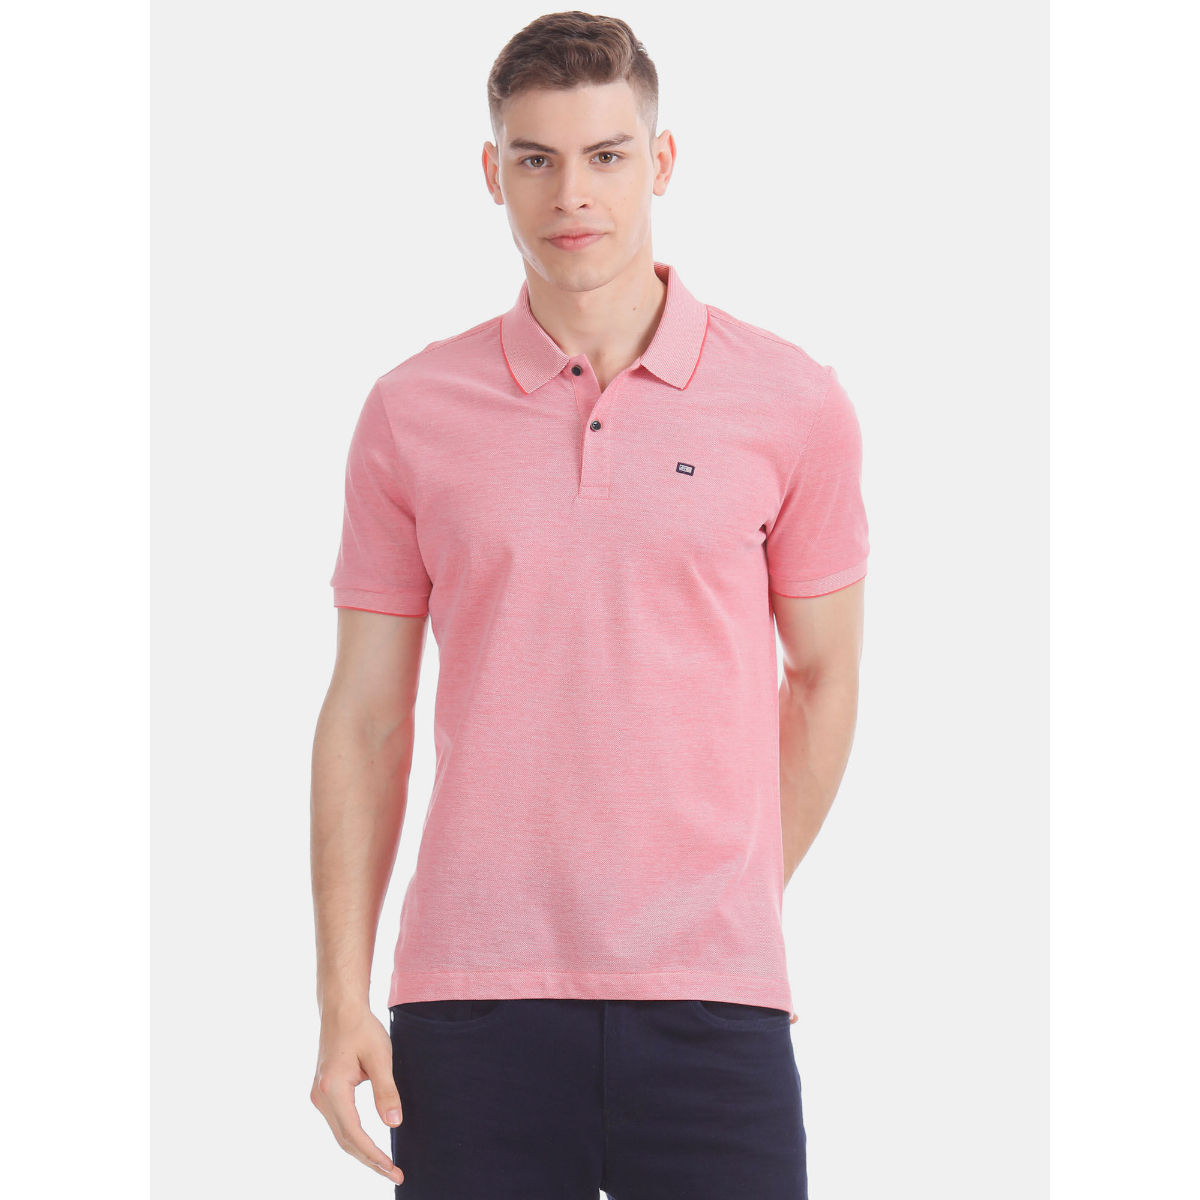 Buy ARROW SPORT Pink Patterned Mercerised Cotton Men's Polo Tees